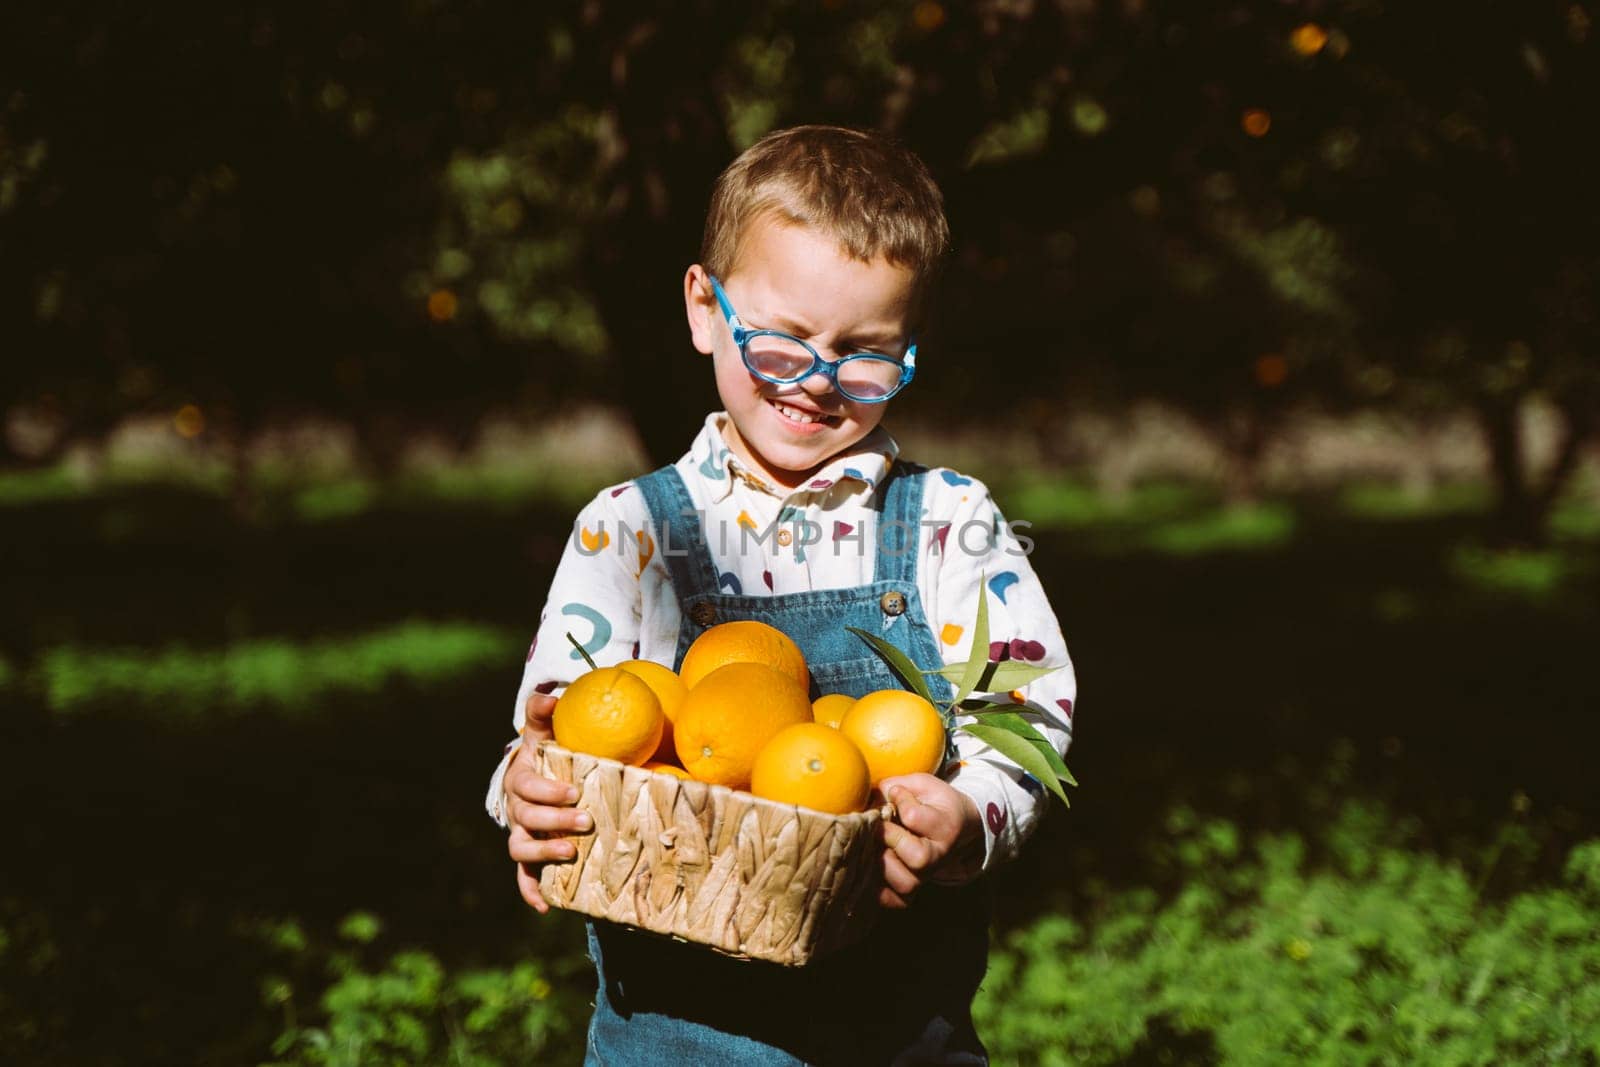 Portrait of Cute Little Farmer Boy Holding Wicker Basket full of fresh Organic Oranges. Happy child kid in eyeglasses harvest vegetable fruit in green orange garden outdoors with trees on background.